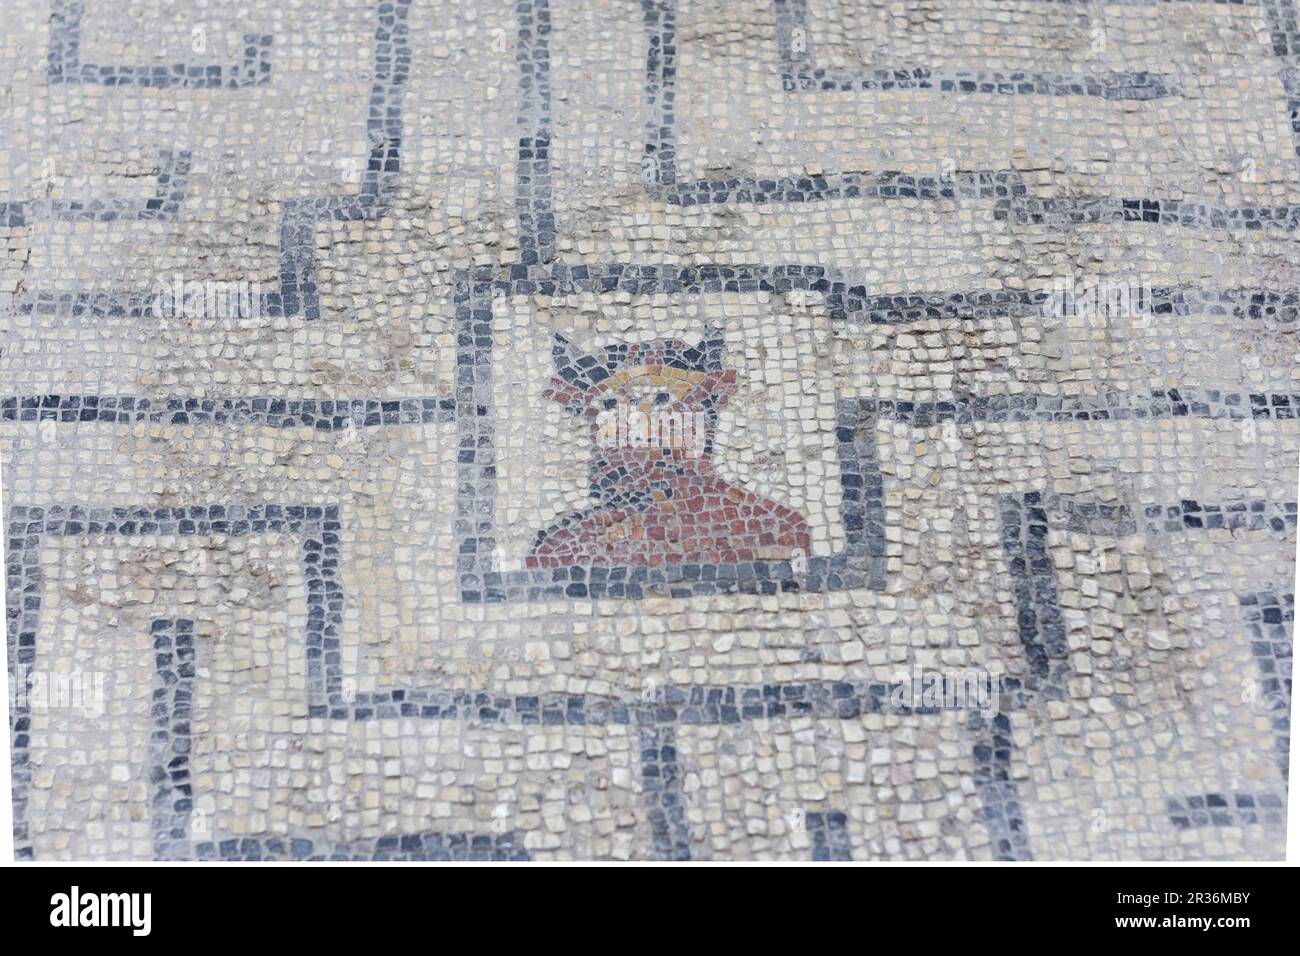 mosaico con el busto policromado de minotauro,museo monografico de Conimbriga, ciudad del Conventus Scallabitanus, provincia romana de Lusitania, cerca de Condeixa-a-Nova, distrito de Coimbra, Portugal, europa. Stock Photo